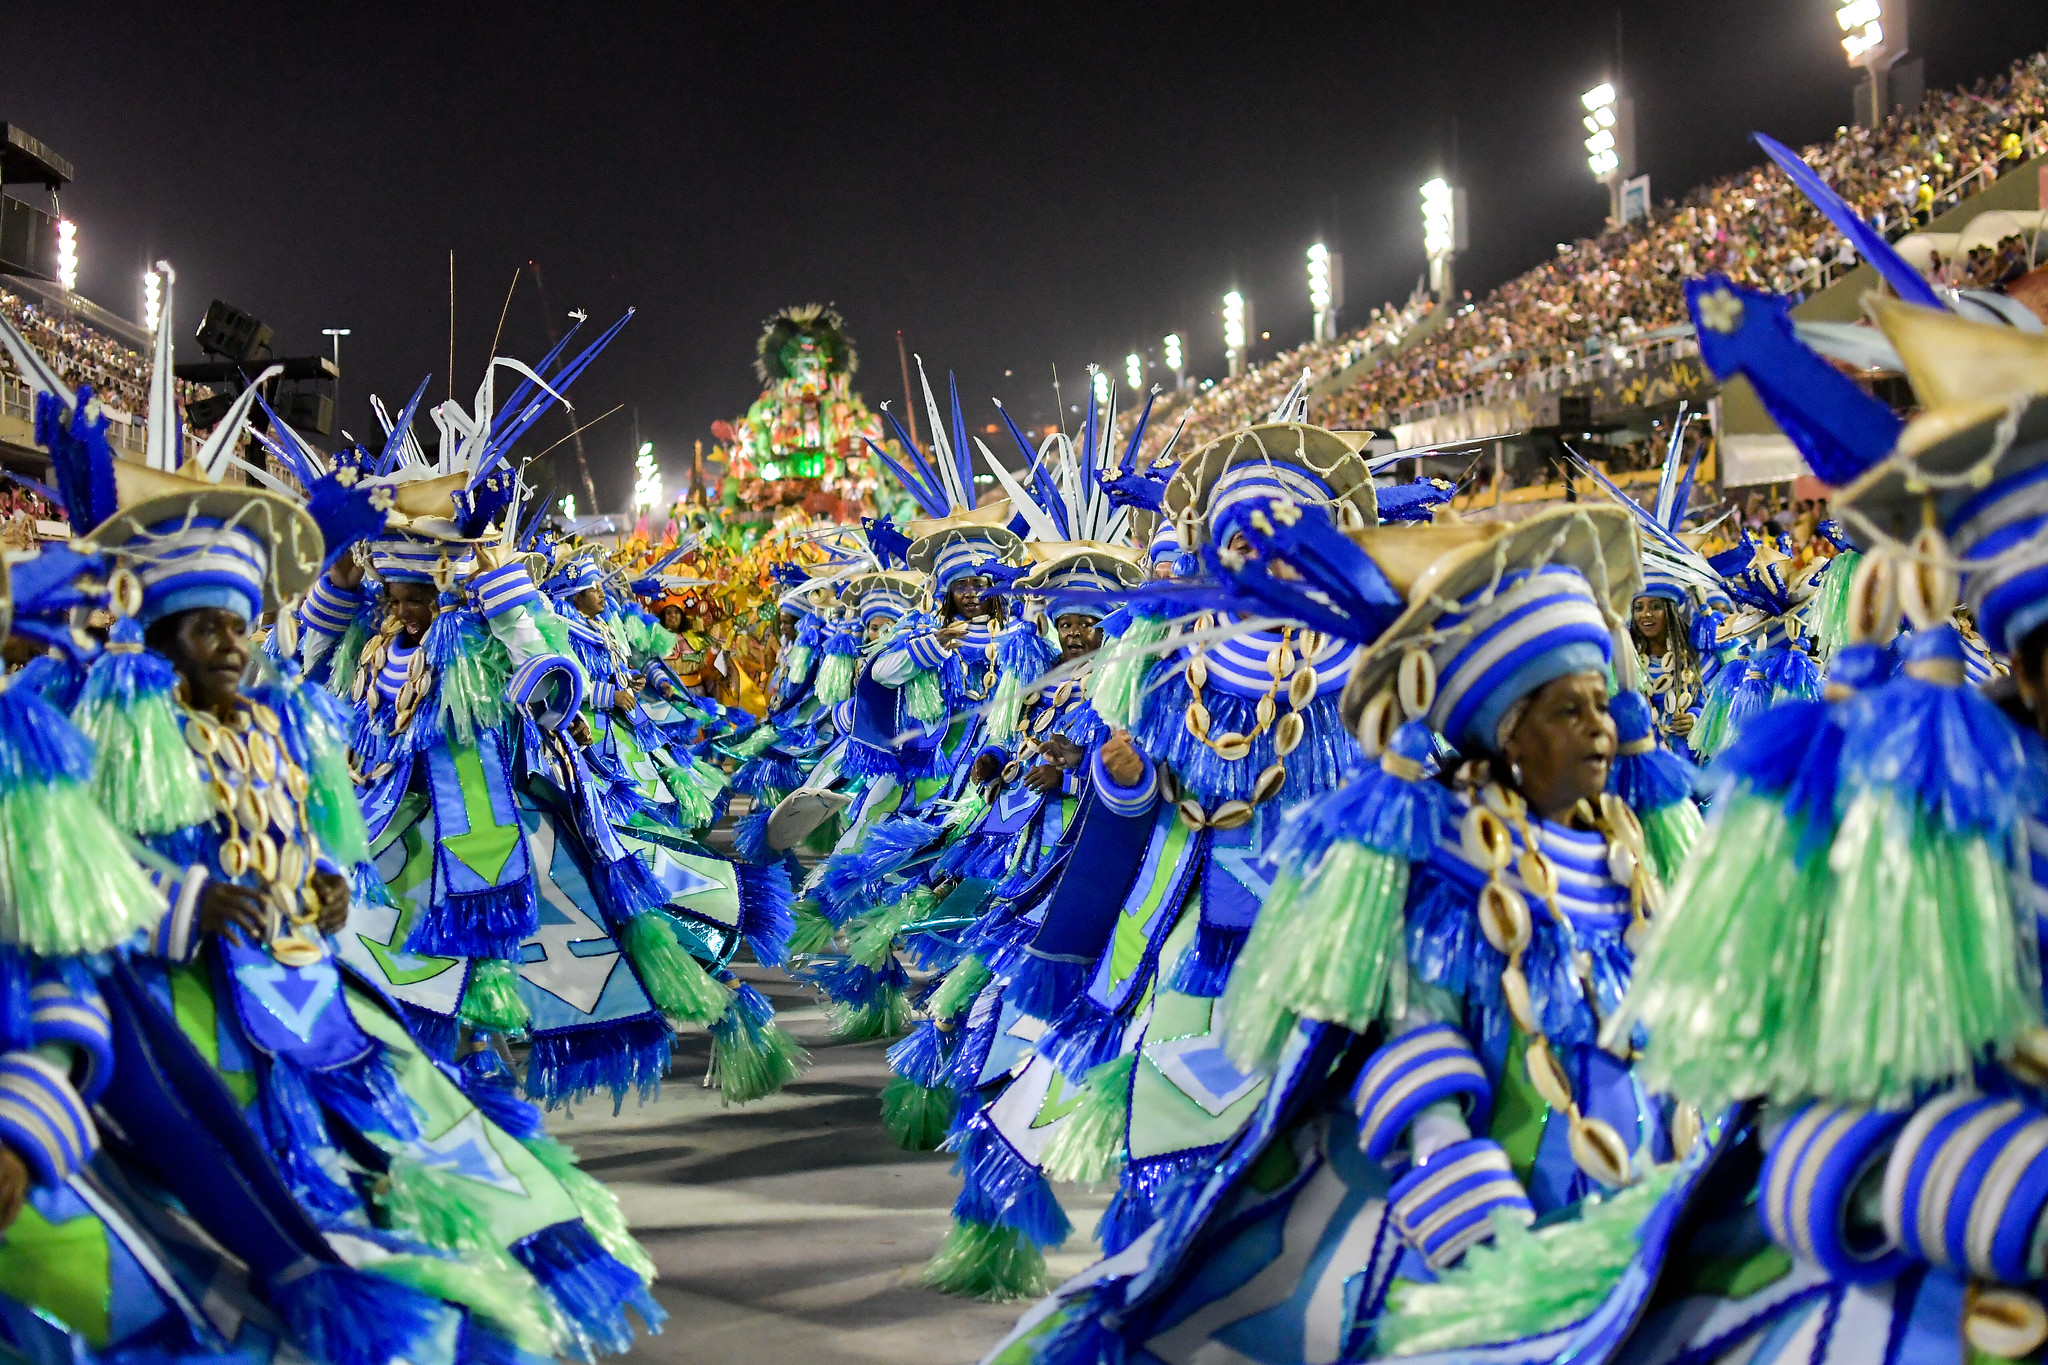 Baianas da Grande Rio evoluem na Sapucaí lotada no Carnaval de 2020. Foto de Dhavid Normando (Riotur)